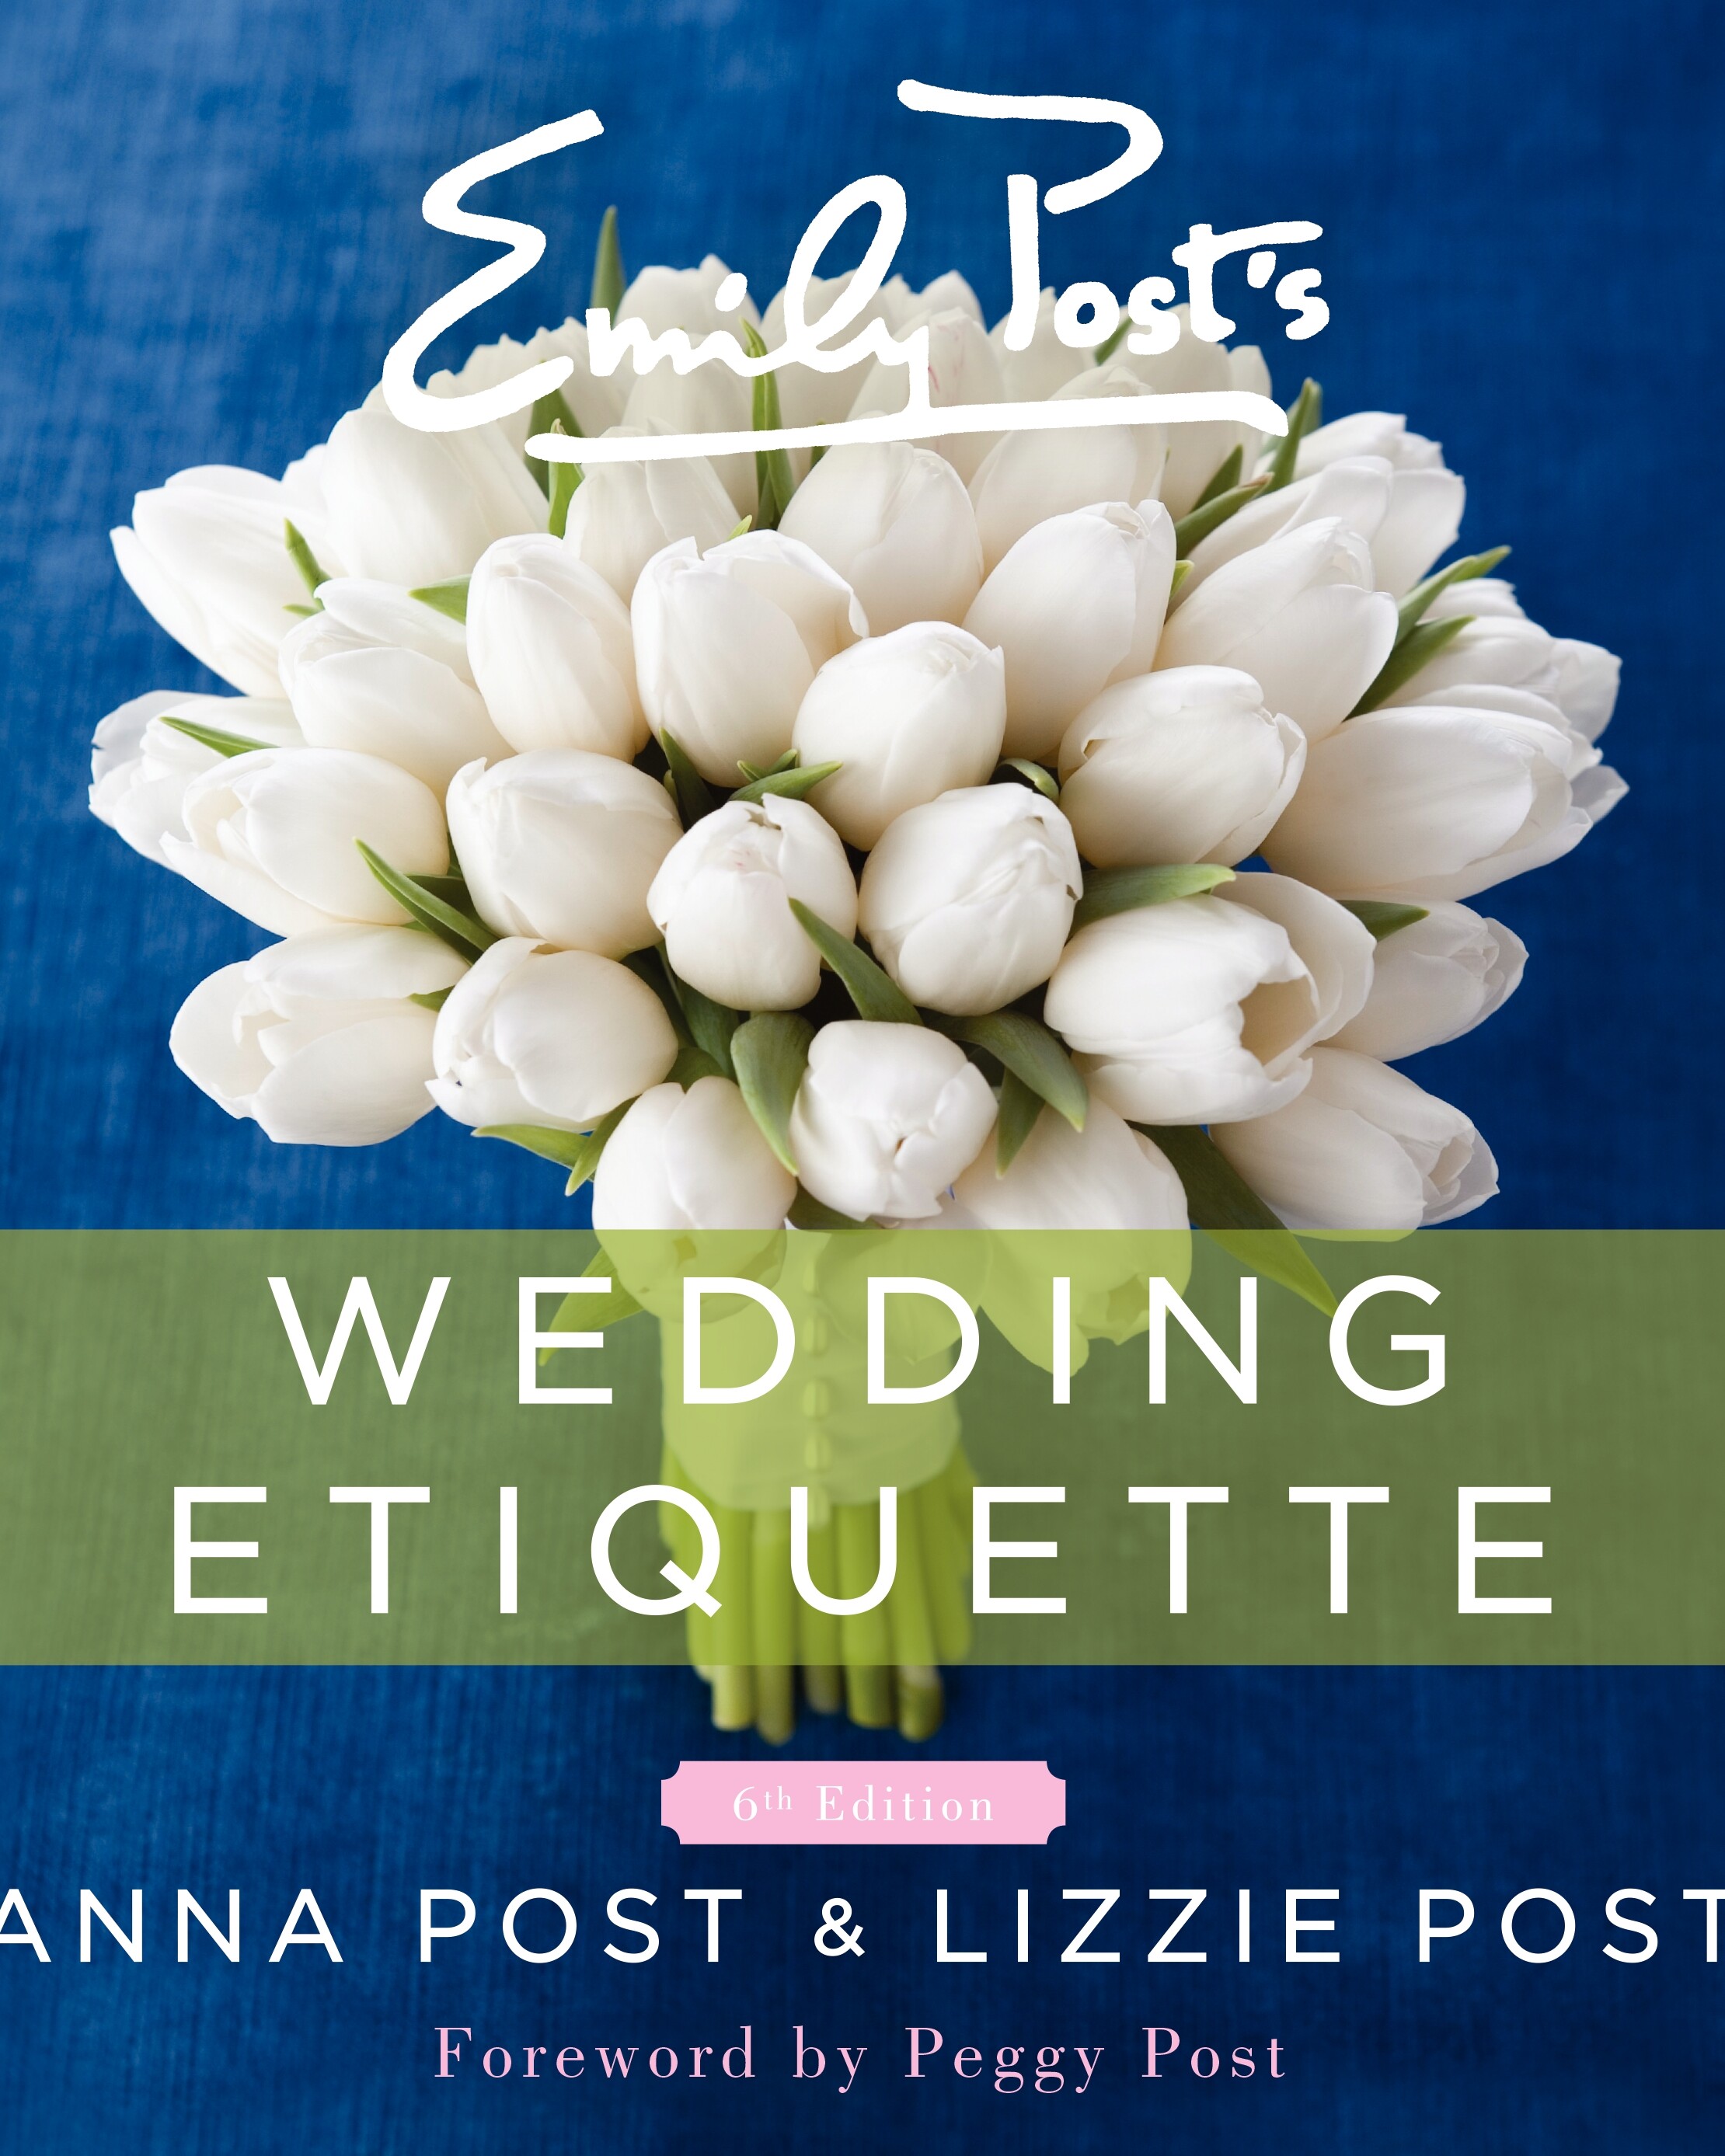 Emily Post’s Wedding Etiquette, 6th Edition